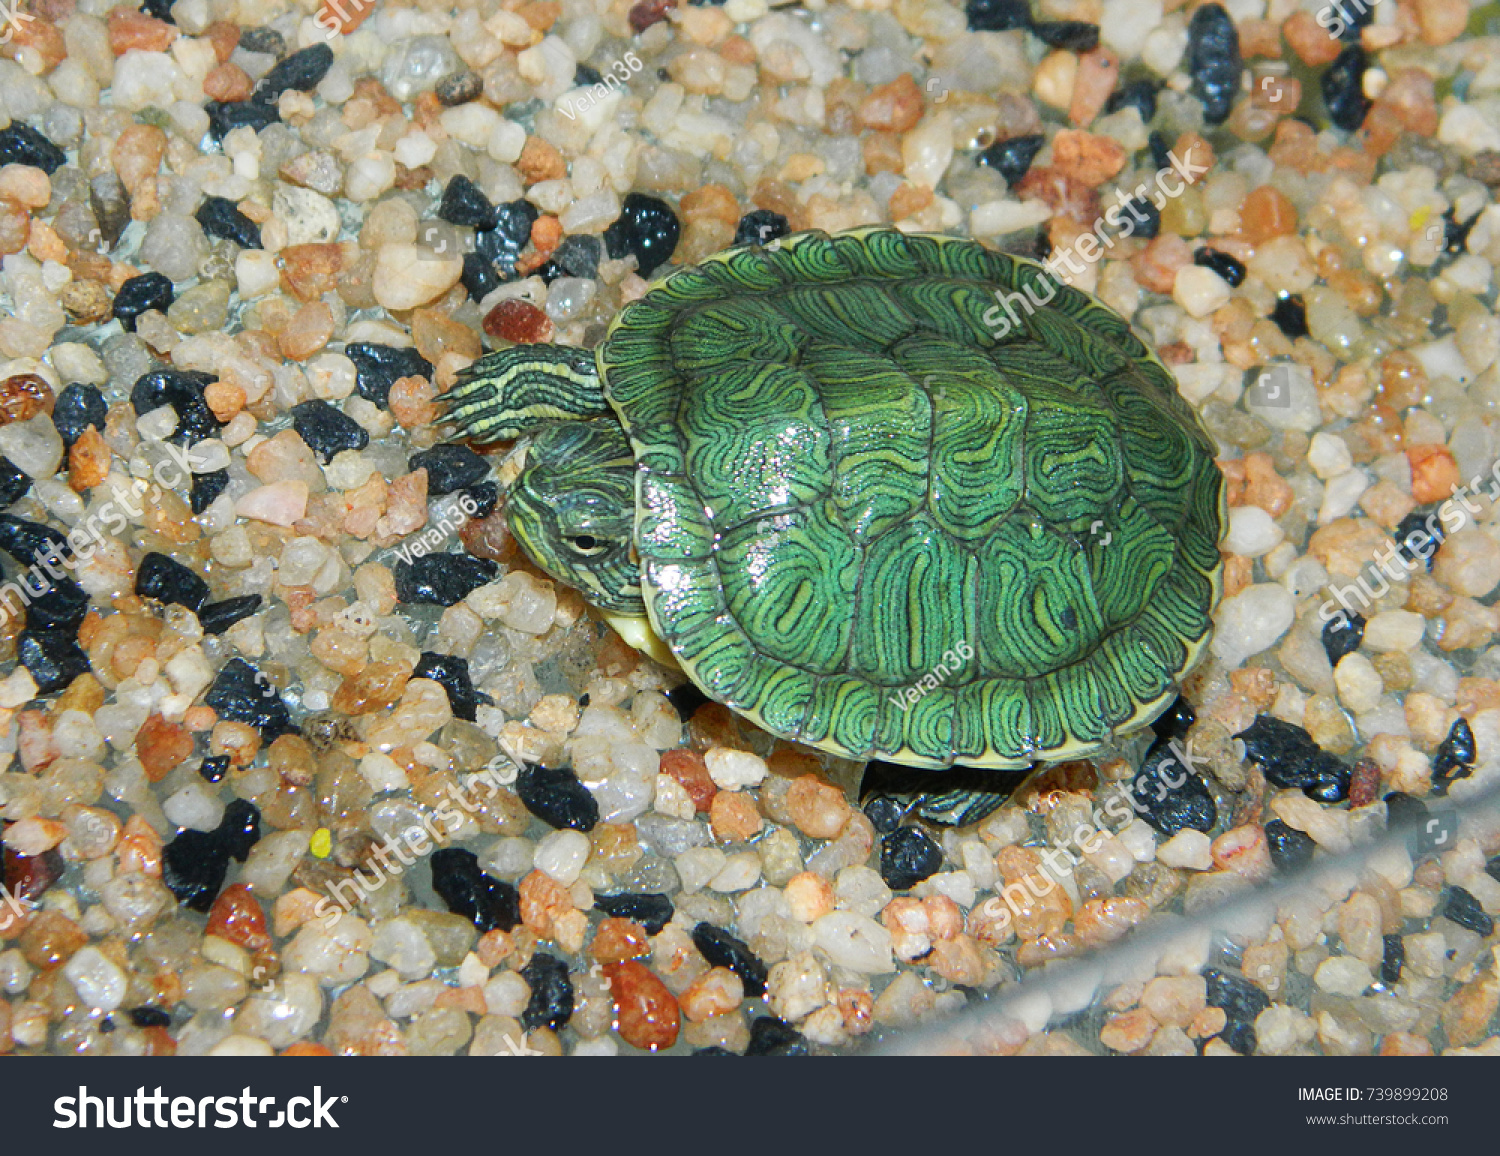 small green tortoise